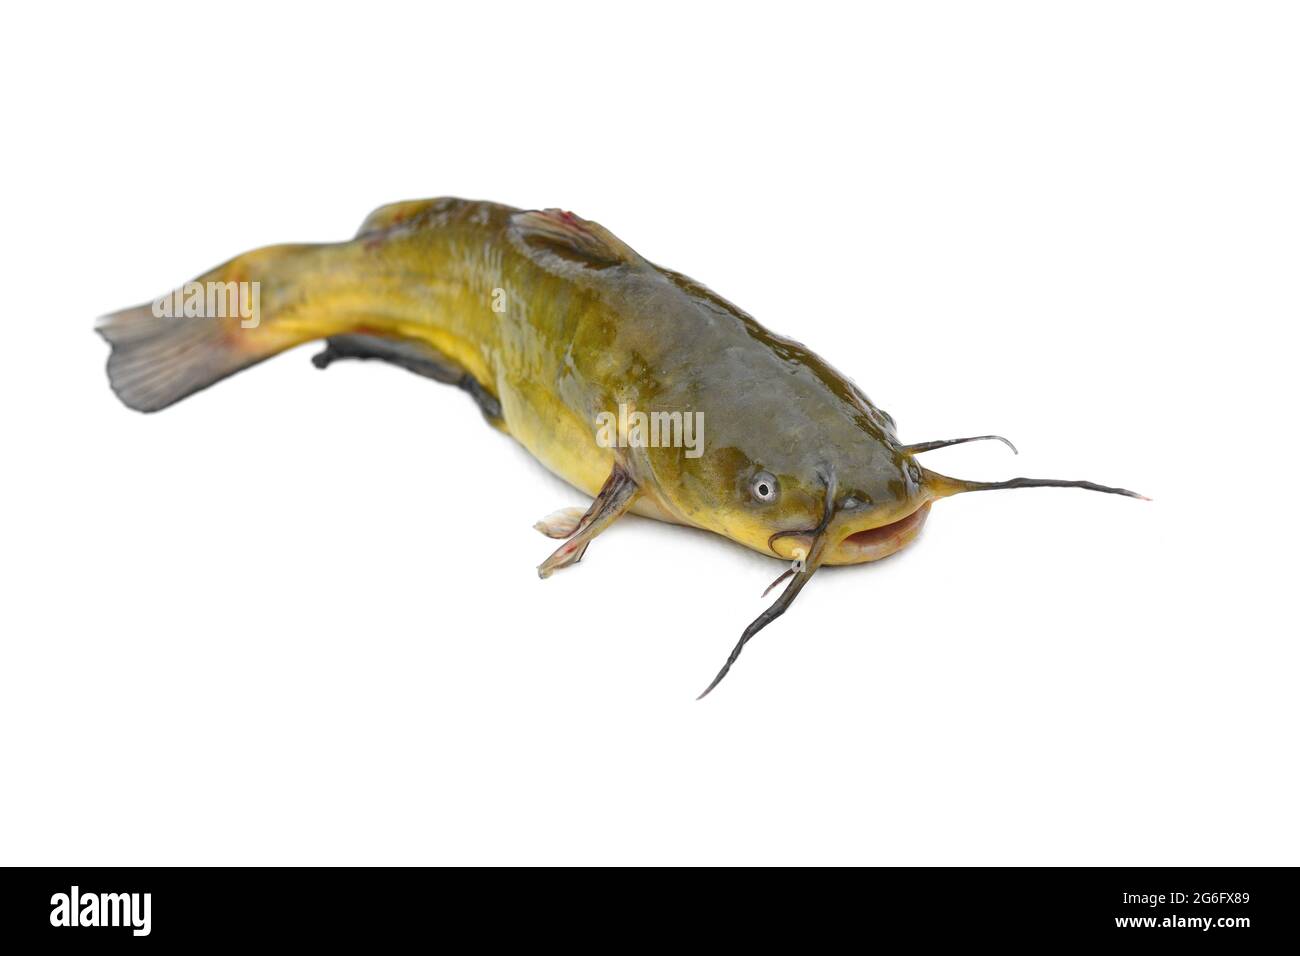 Brown bullhead or black bullhead catfish, Ameiurus melas isolated on white background. Stock Photo